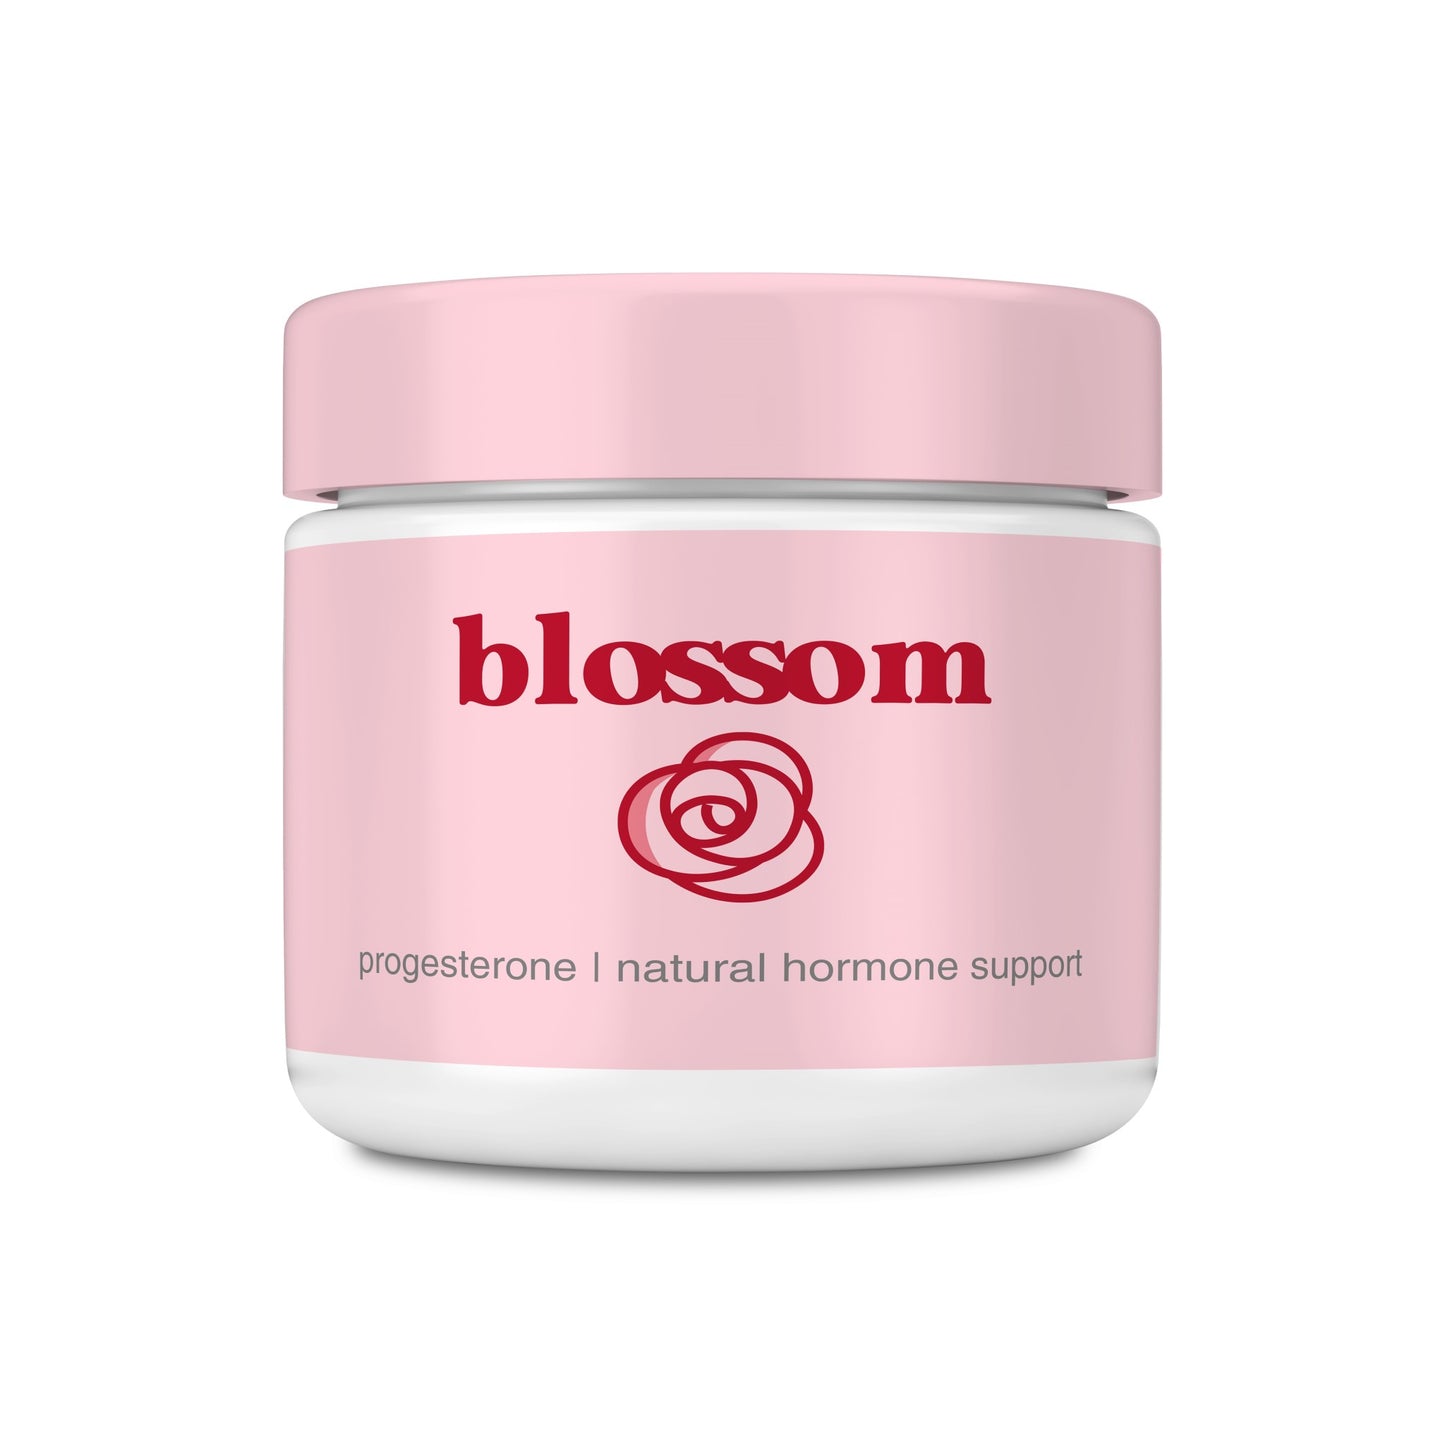 Blossom | Progesterone | Natural Hormone Support